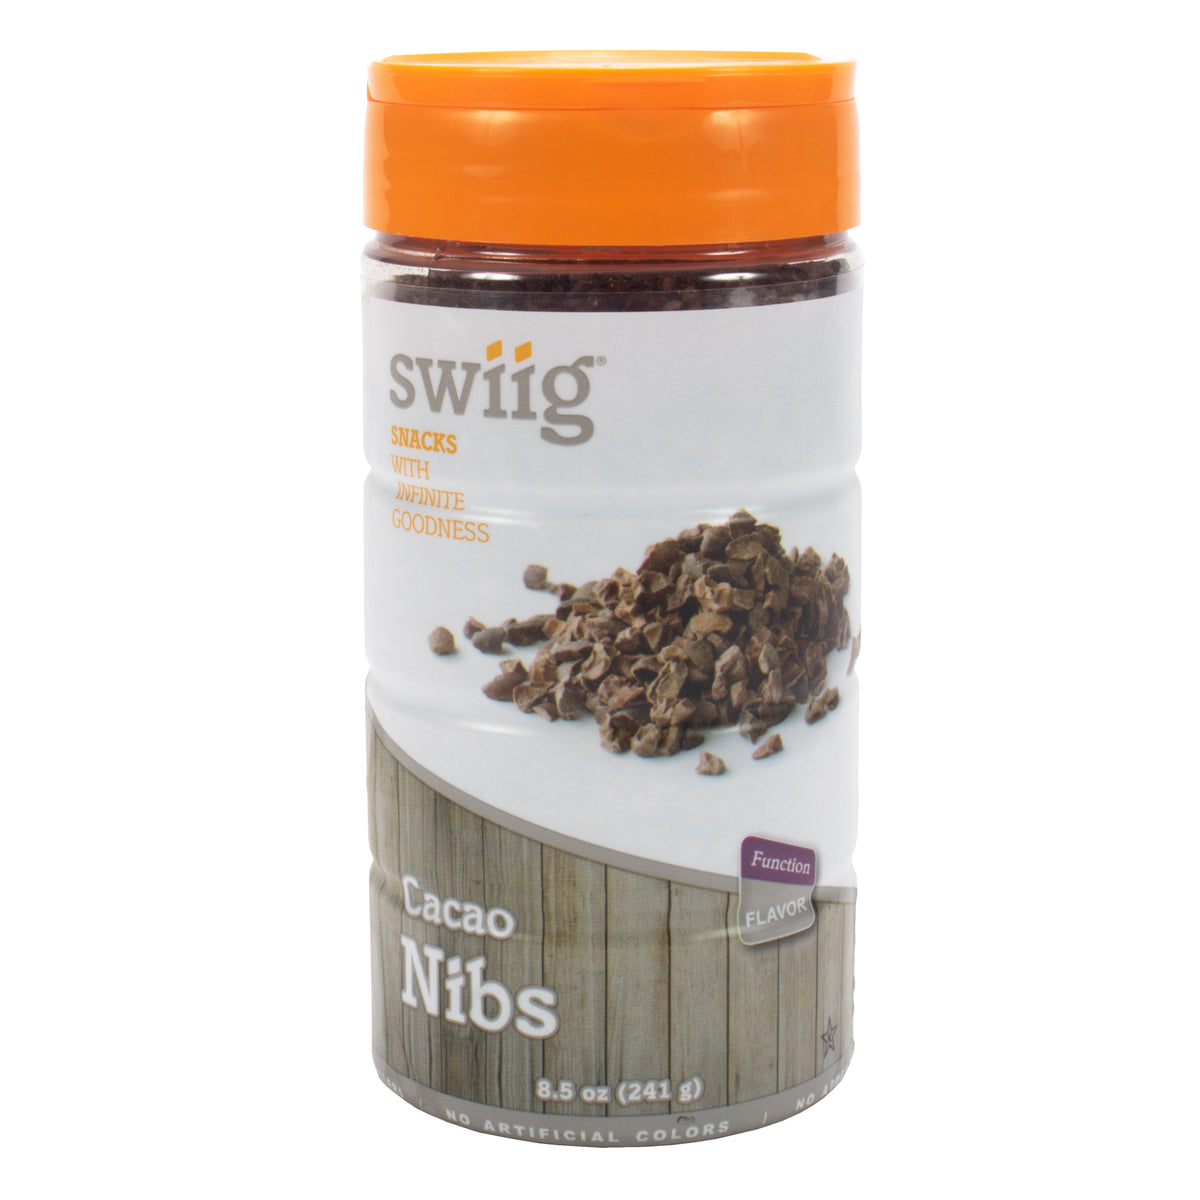 Cacao Nibs - swiig